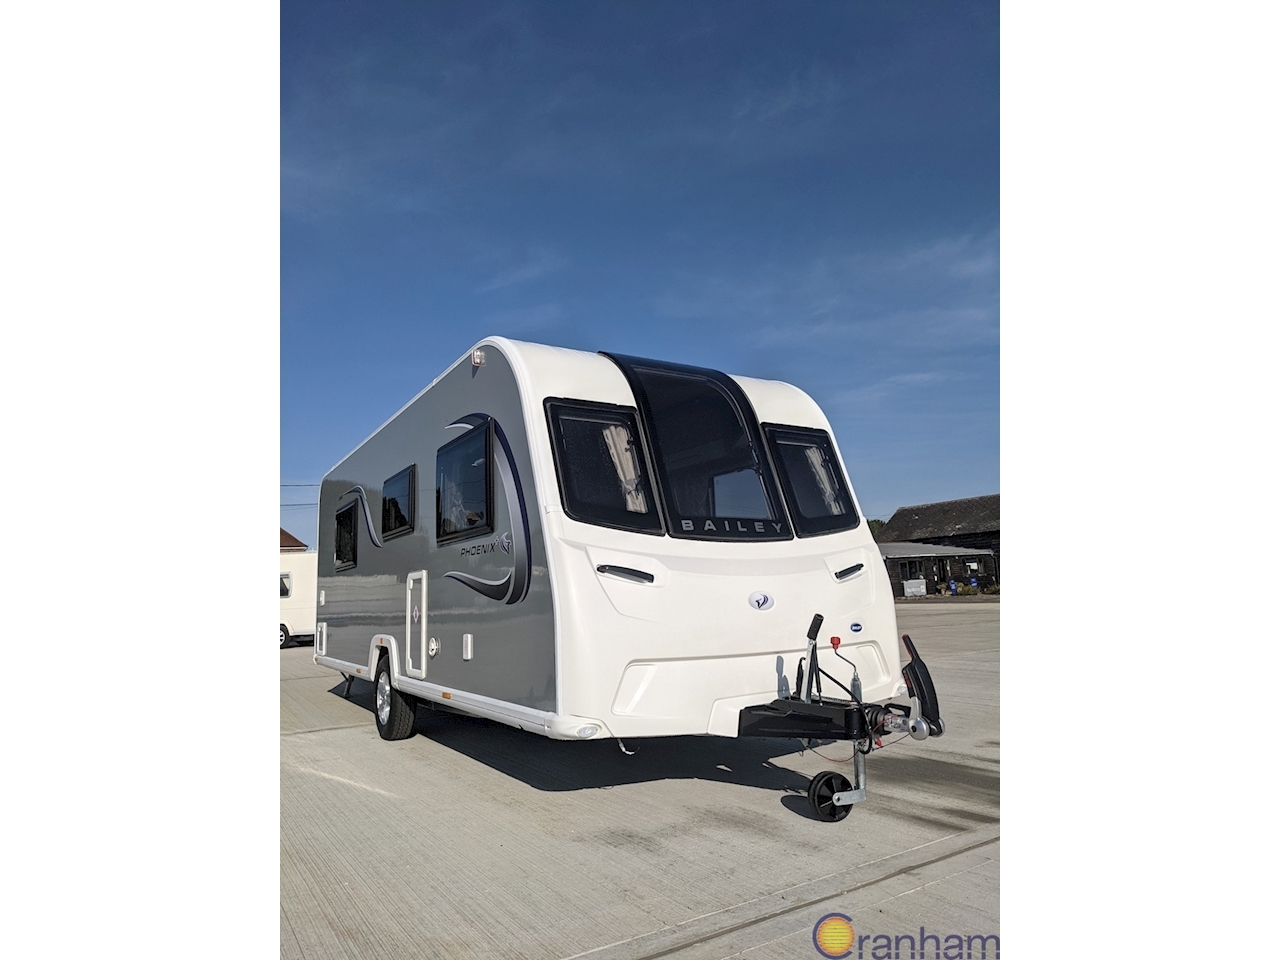 2022 Bailey Phoenix +644 Caravan - Large 1